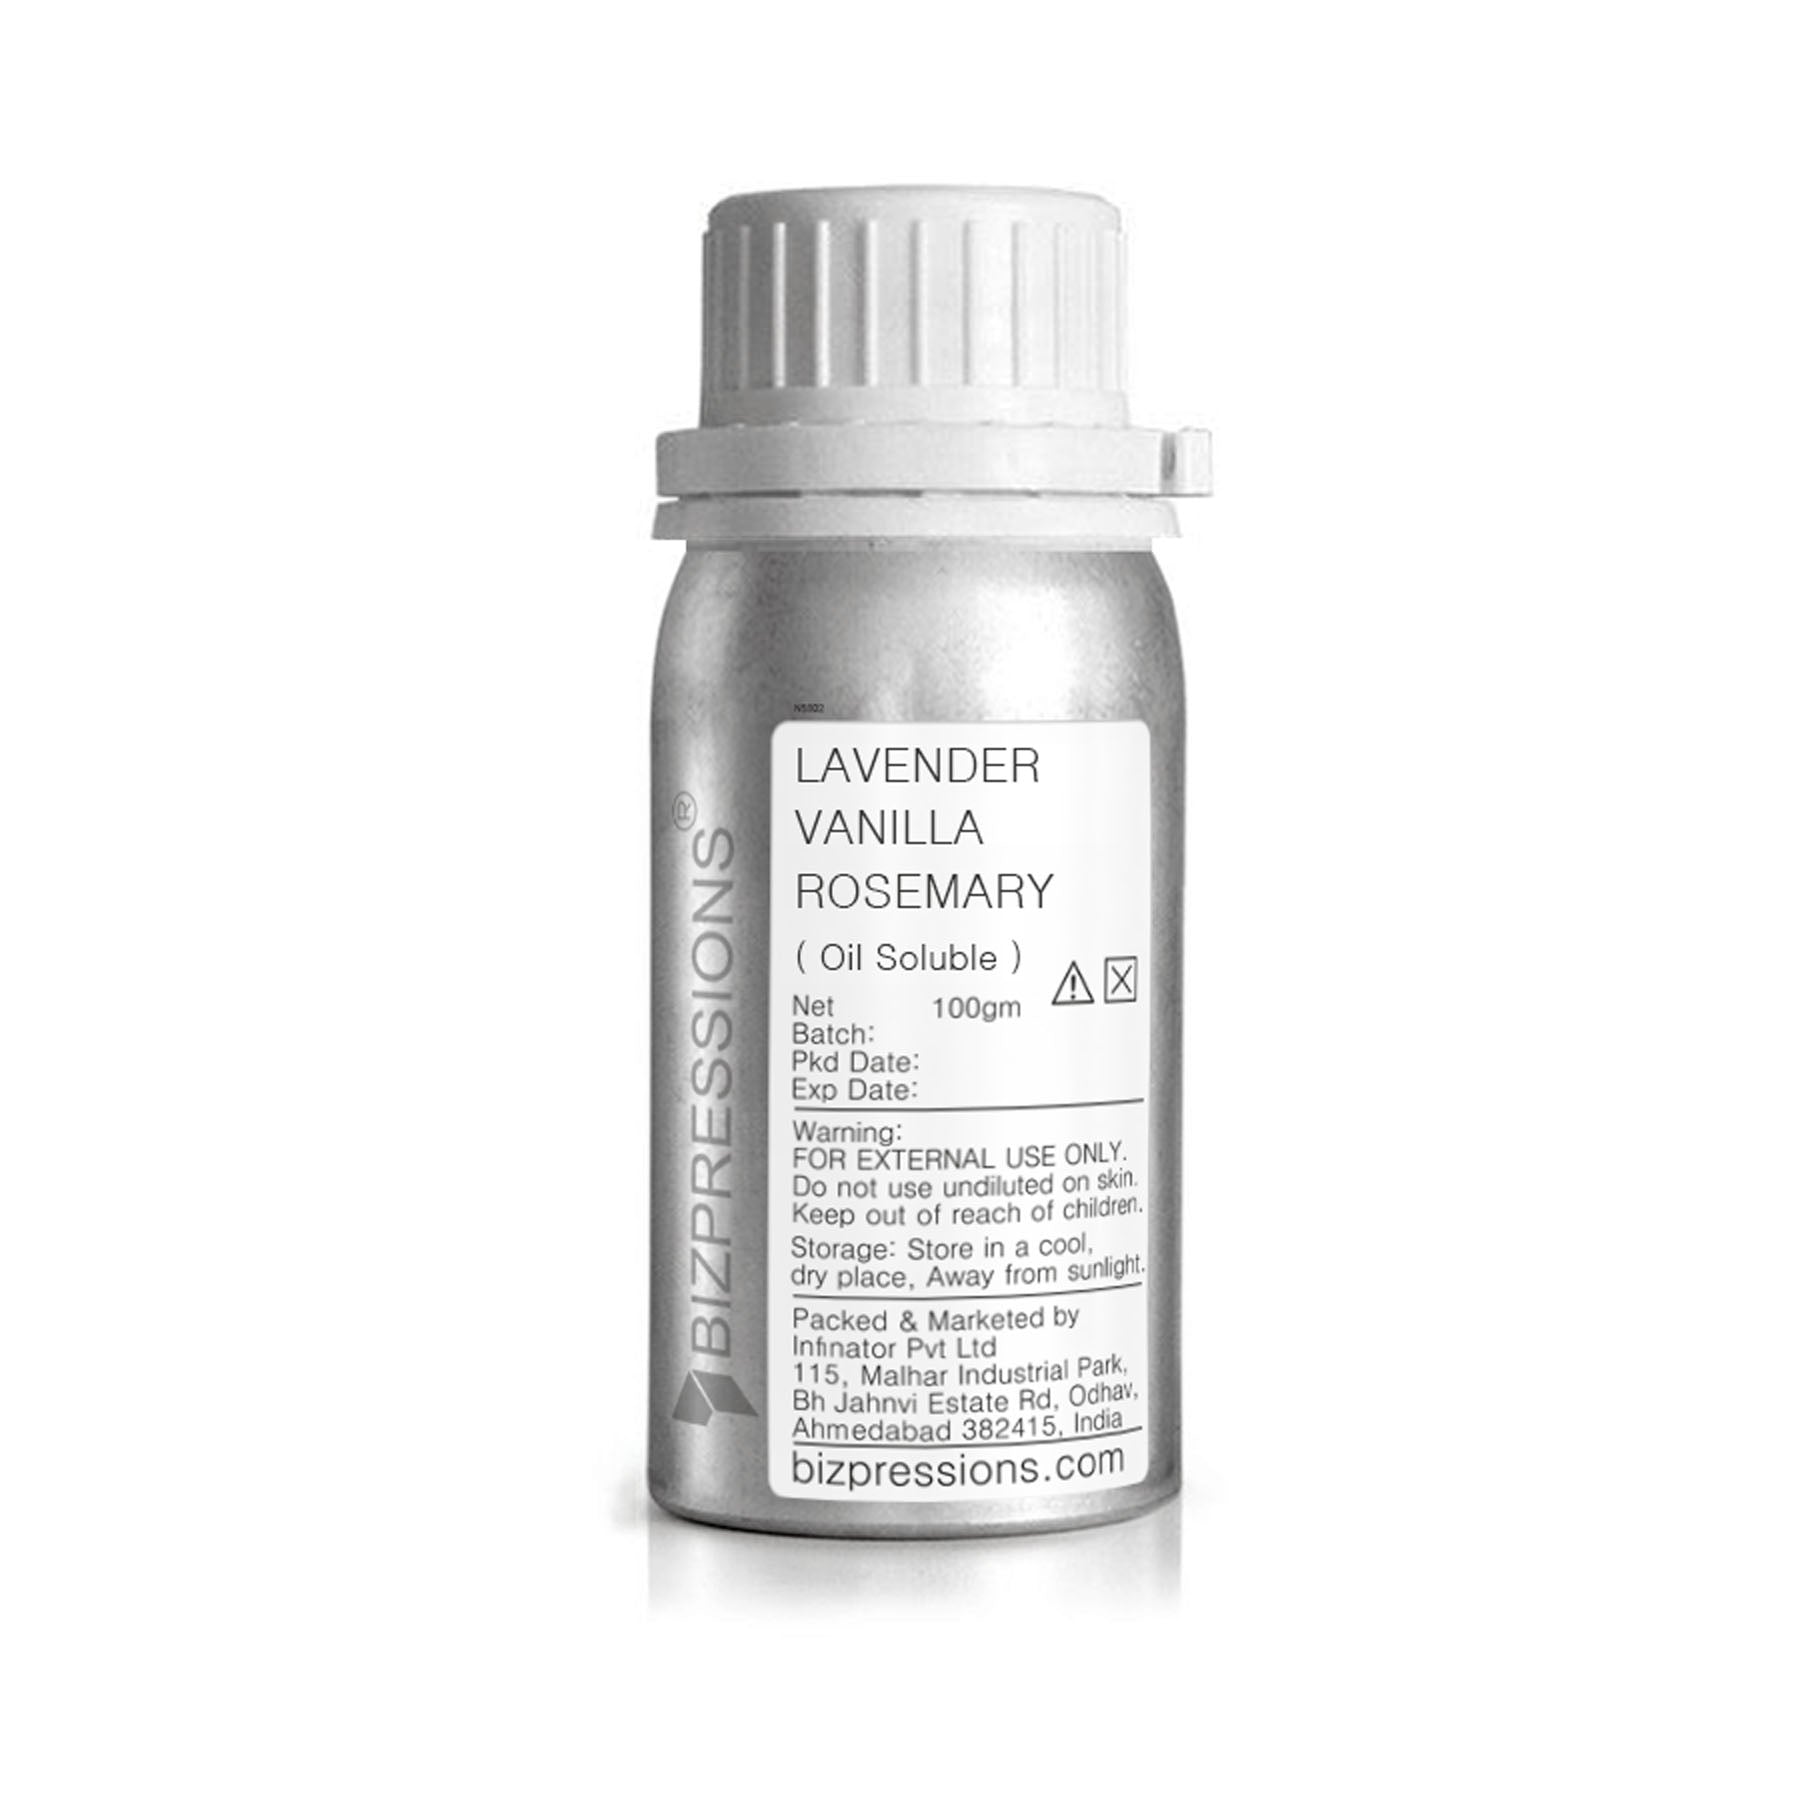 LAVENDER VANILLA ROSEMARY - Fragrance ( Oil Soluble )